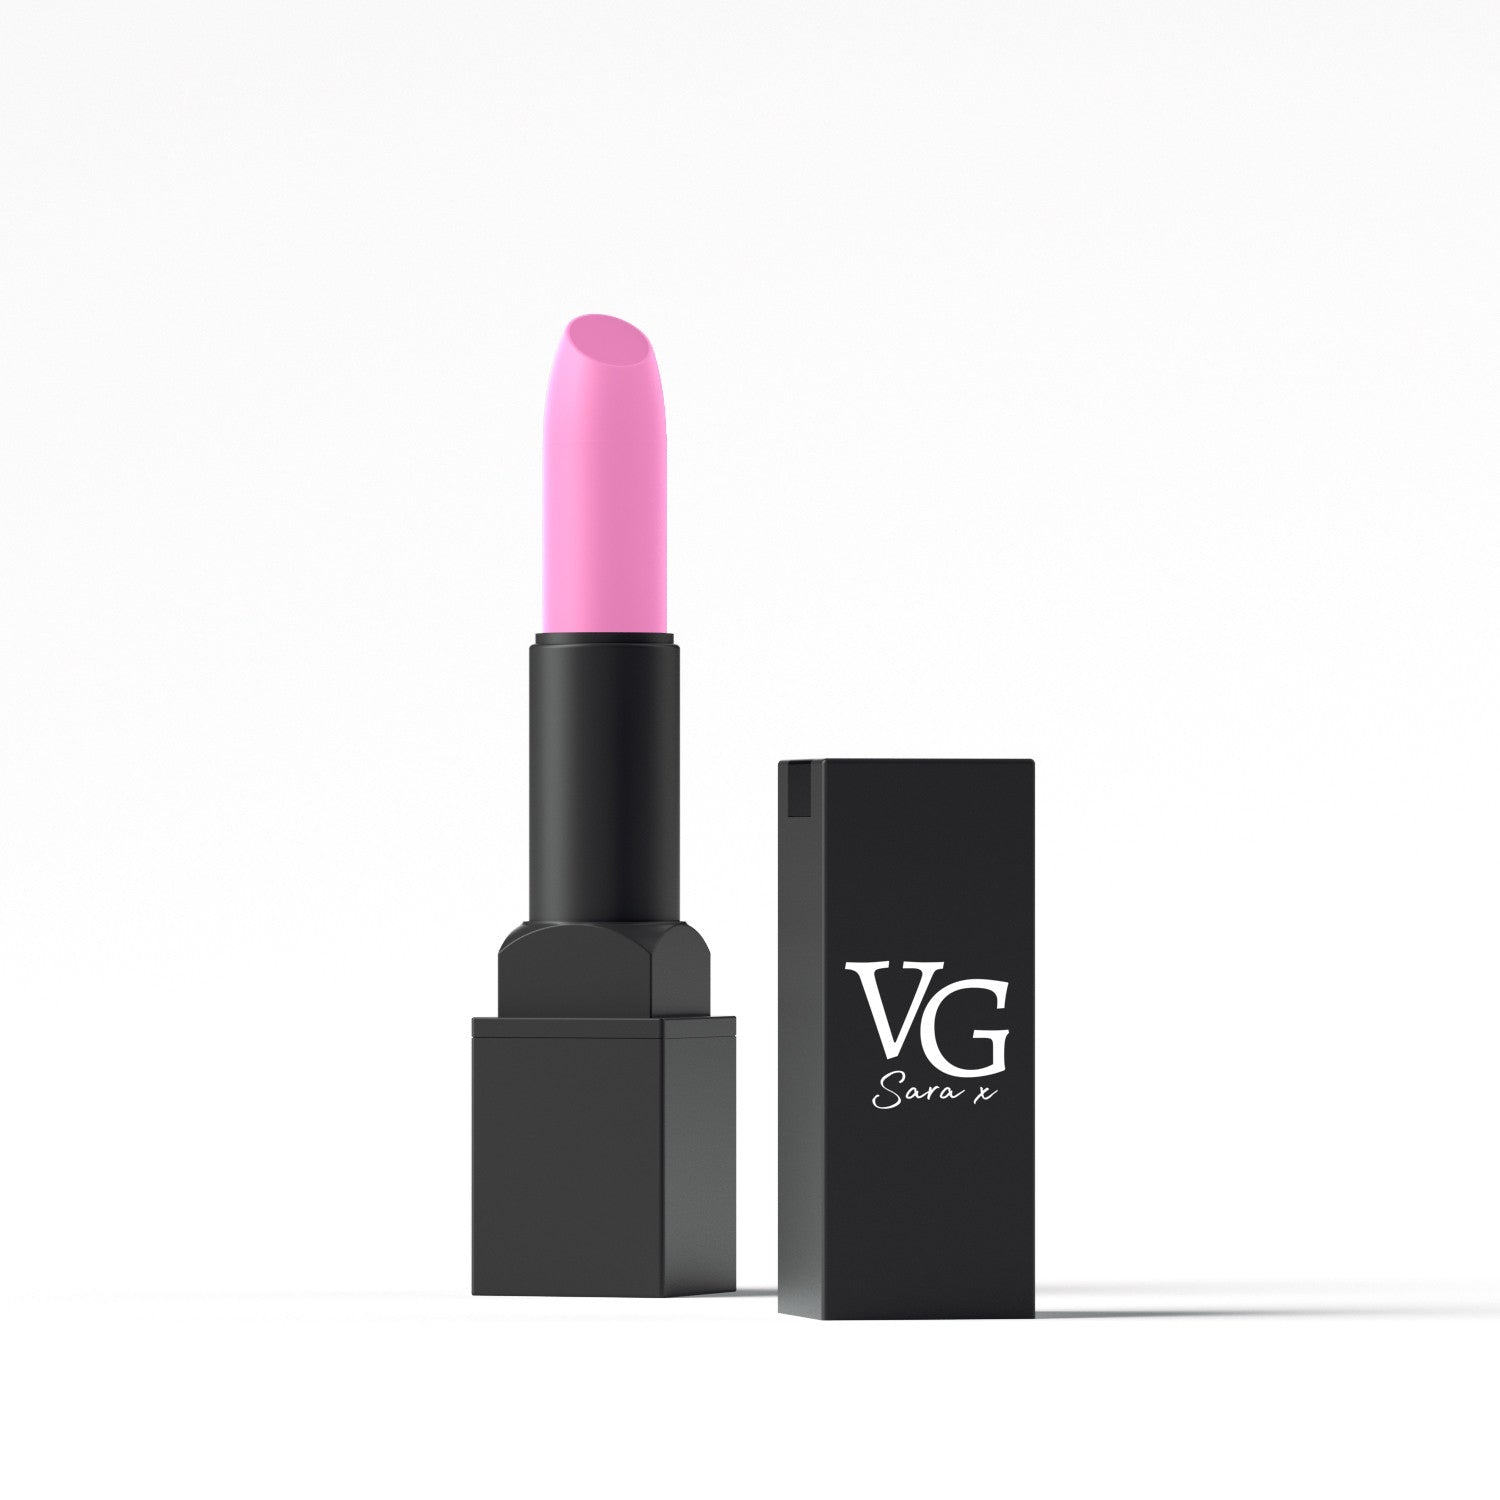 VG Cosmetics beauty lipstick alongside its tap cover